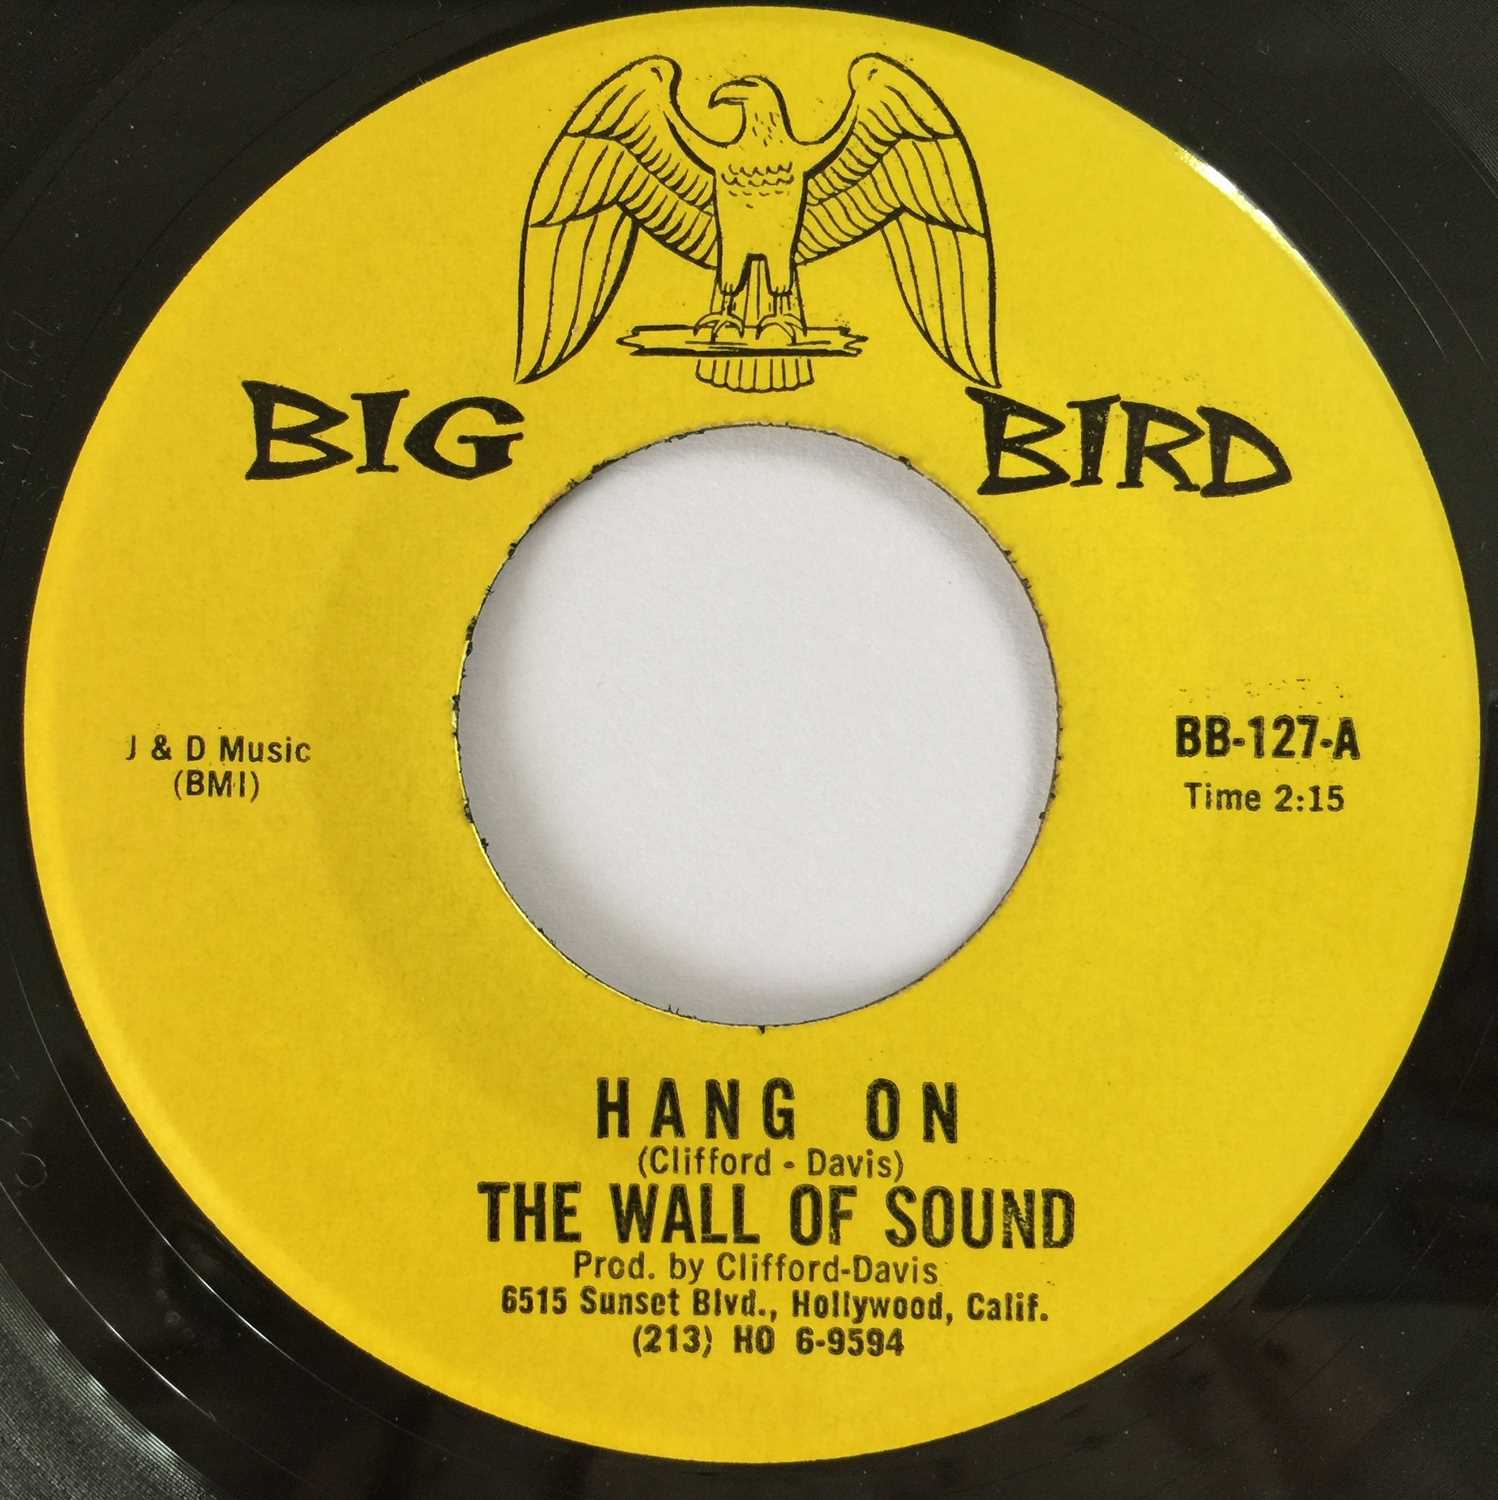 THE WALL OF SOUND - HANG ON 7" (ORIGINAL US COPY - BIG BIRD BB-127)